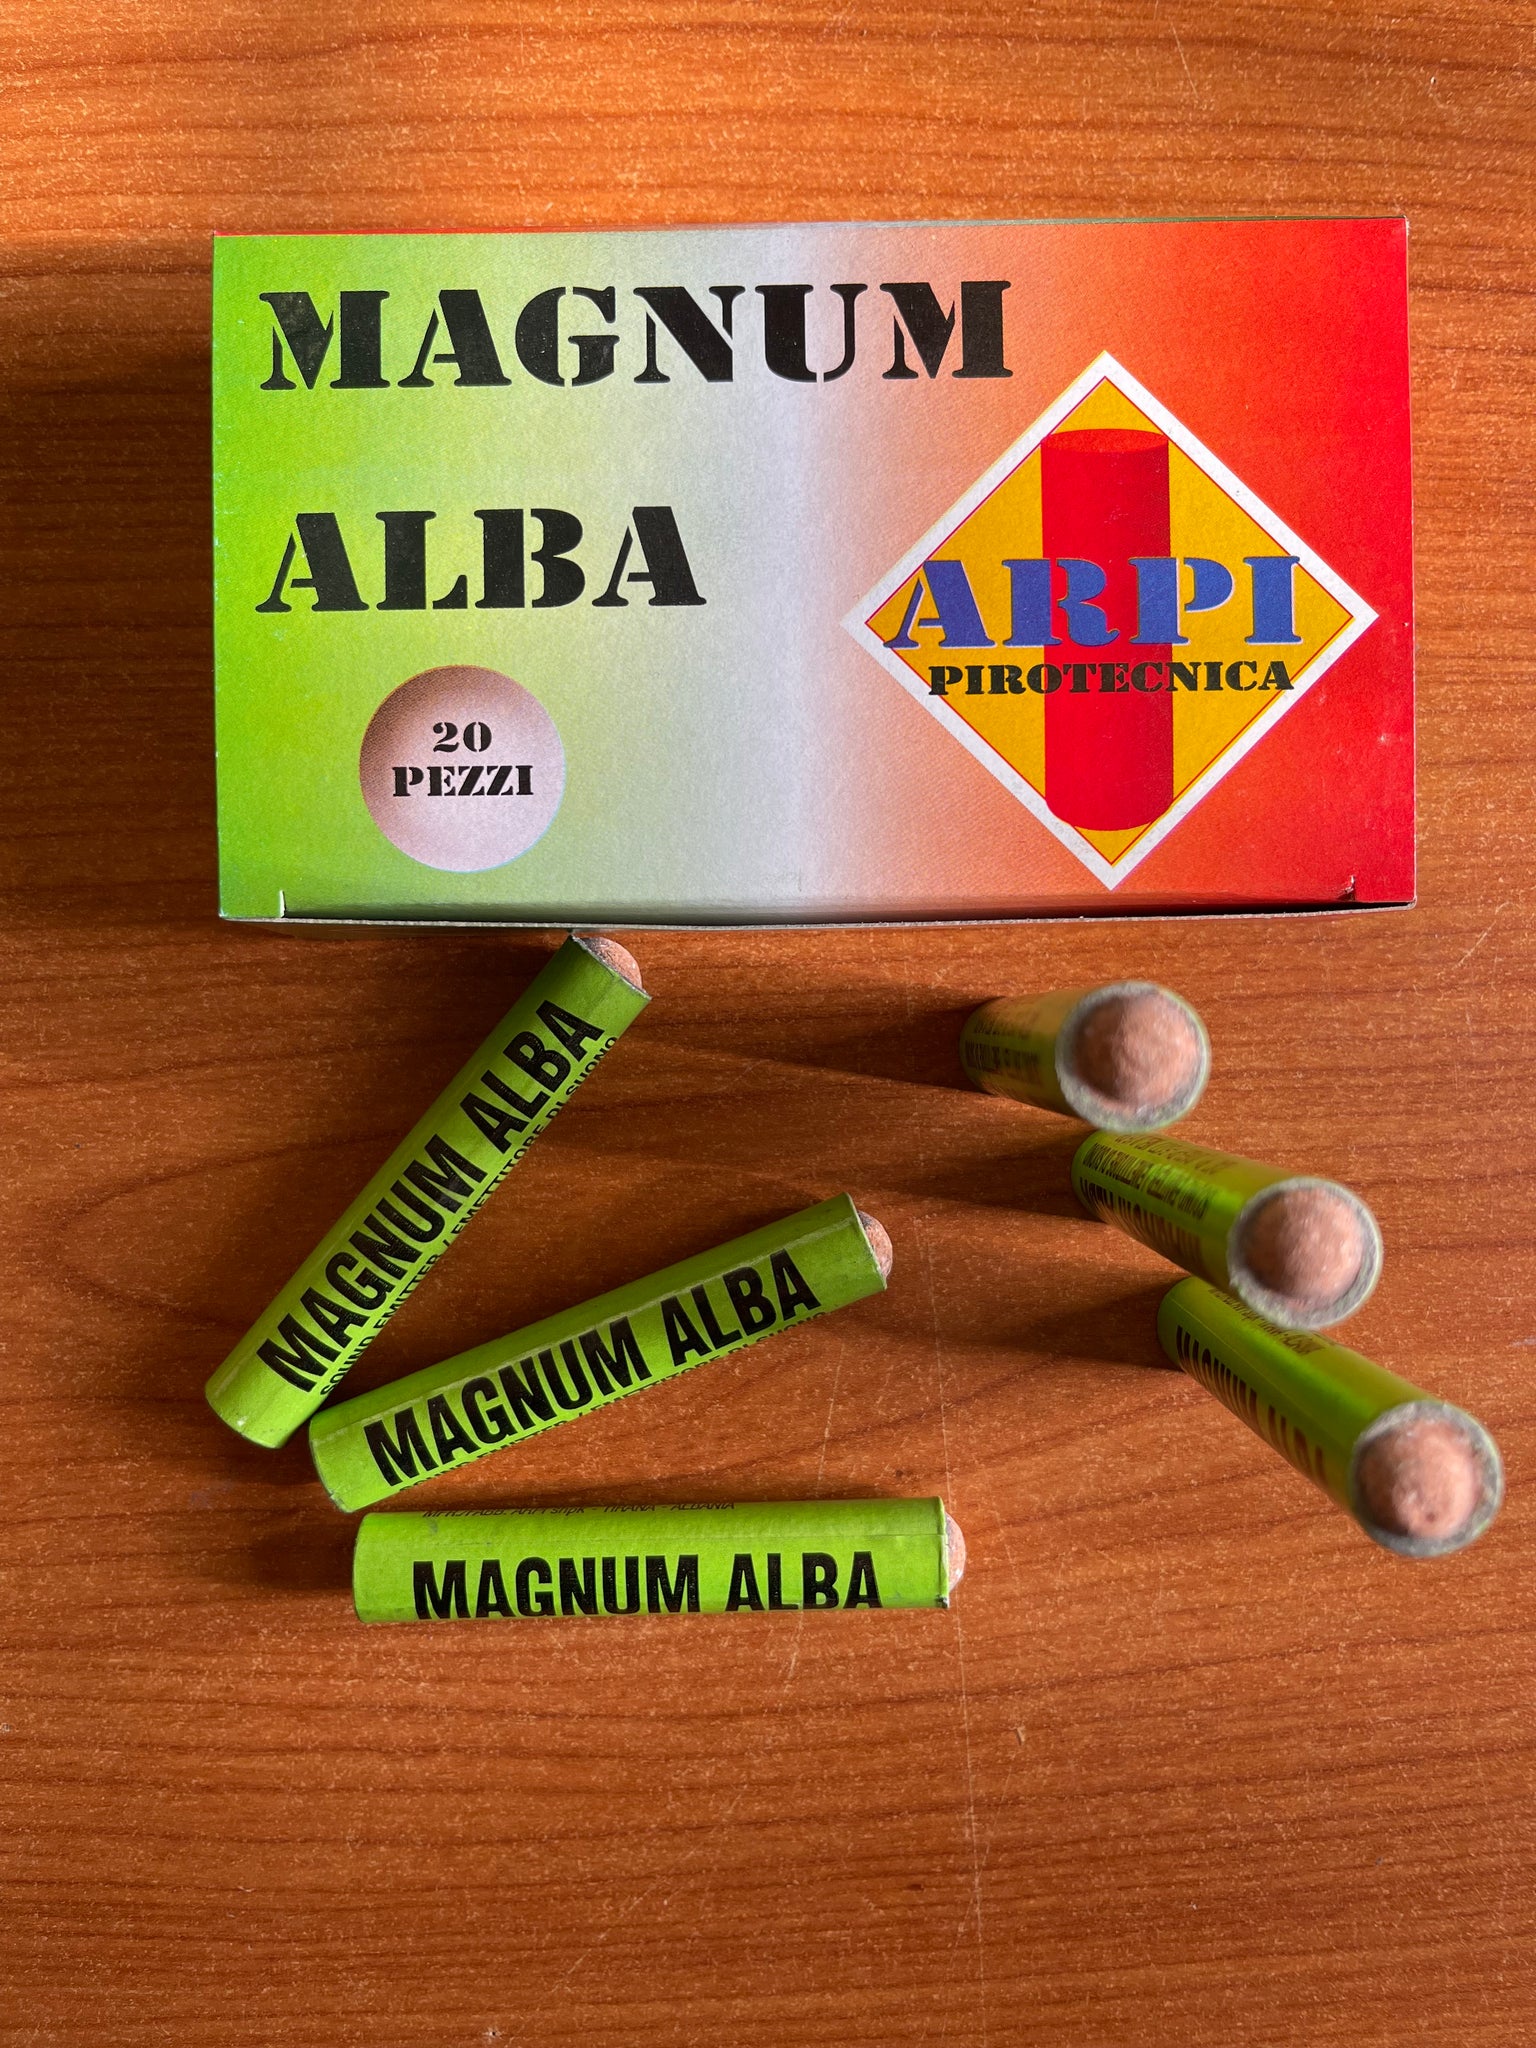 Magnum ALBA sfregamento – Ronchi Fireworks